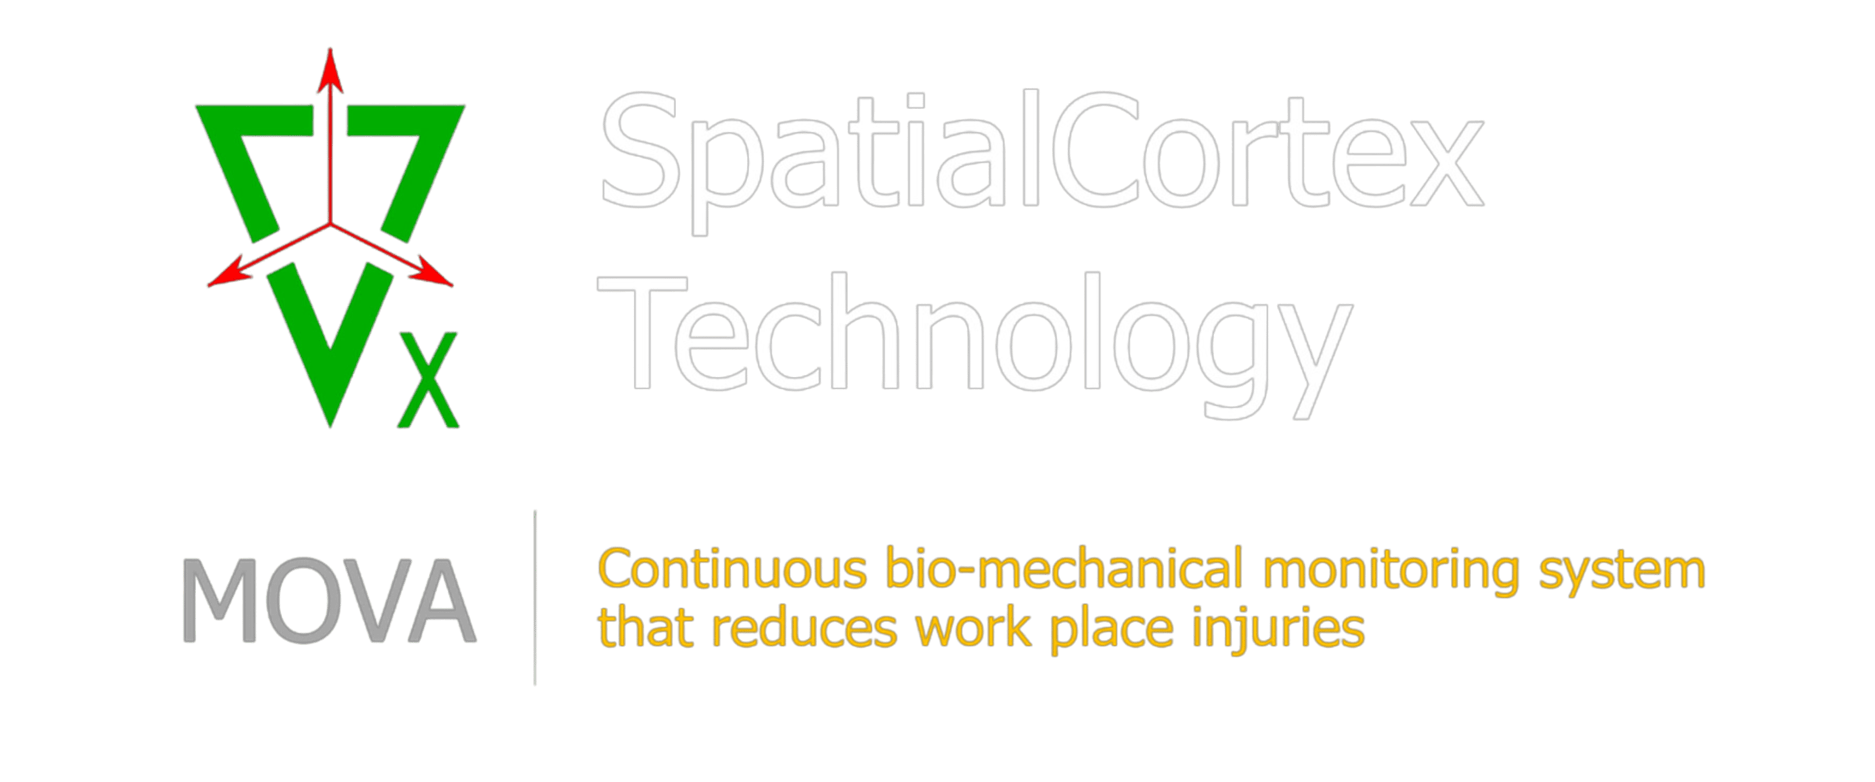 Spatial Cortext logo